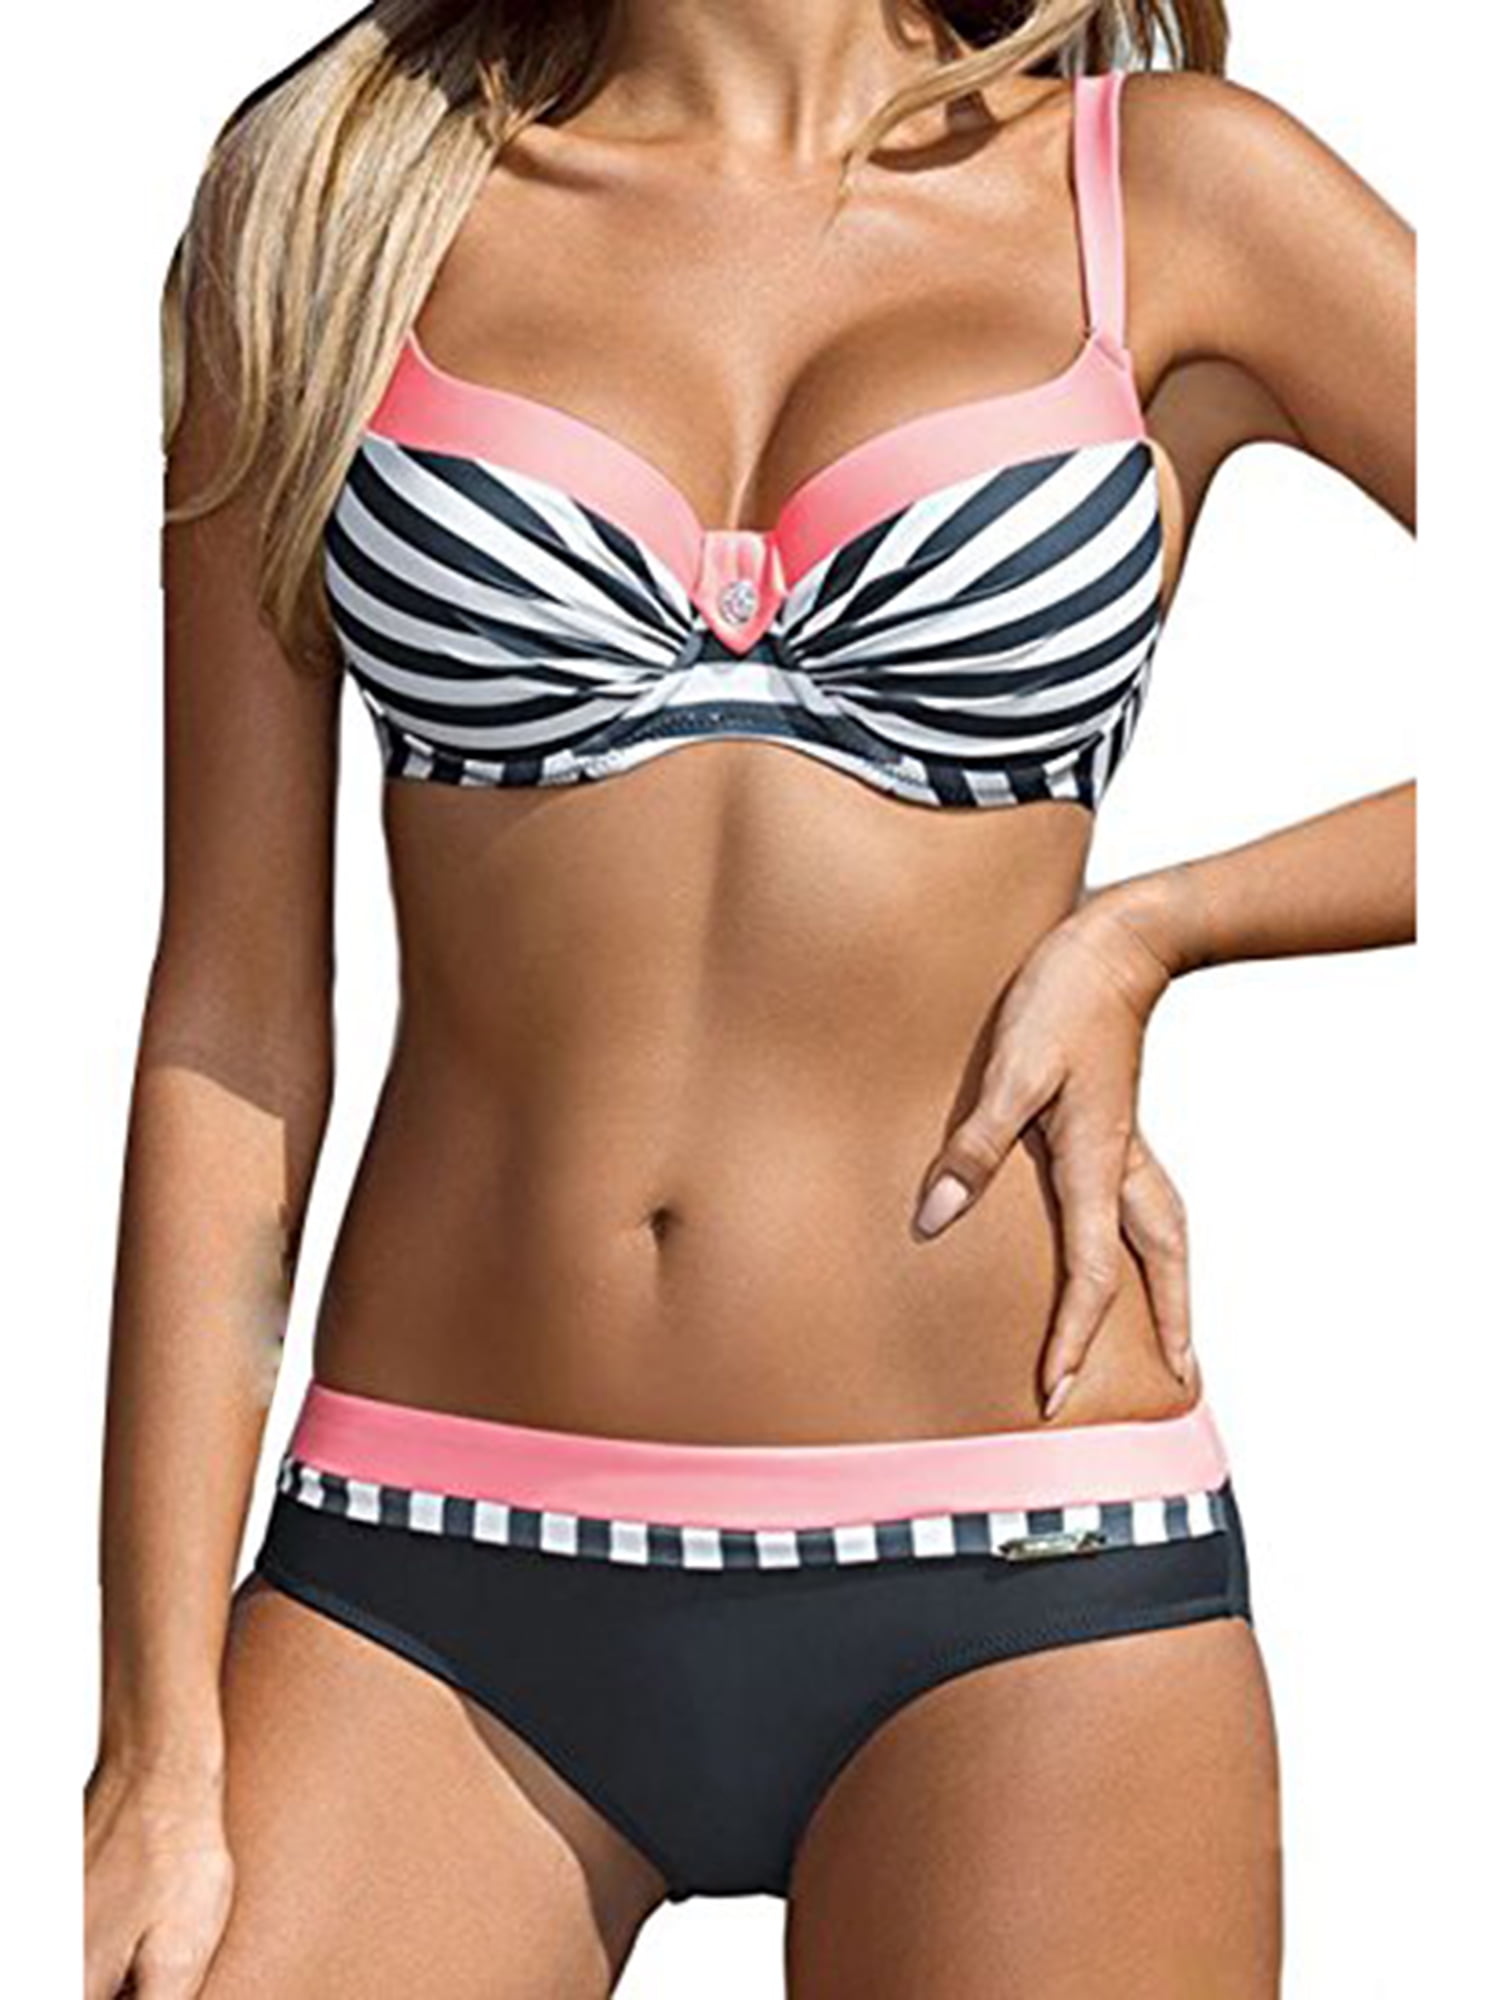 Sayfut Classic Women S Stripe Bikini Set Push Up Padded Swimsuit Plus Size Two Piece Straps